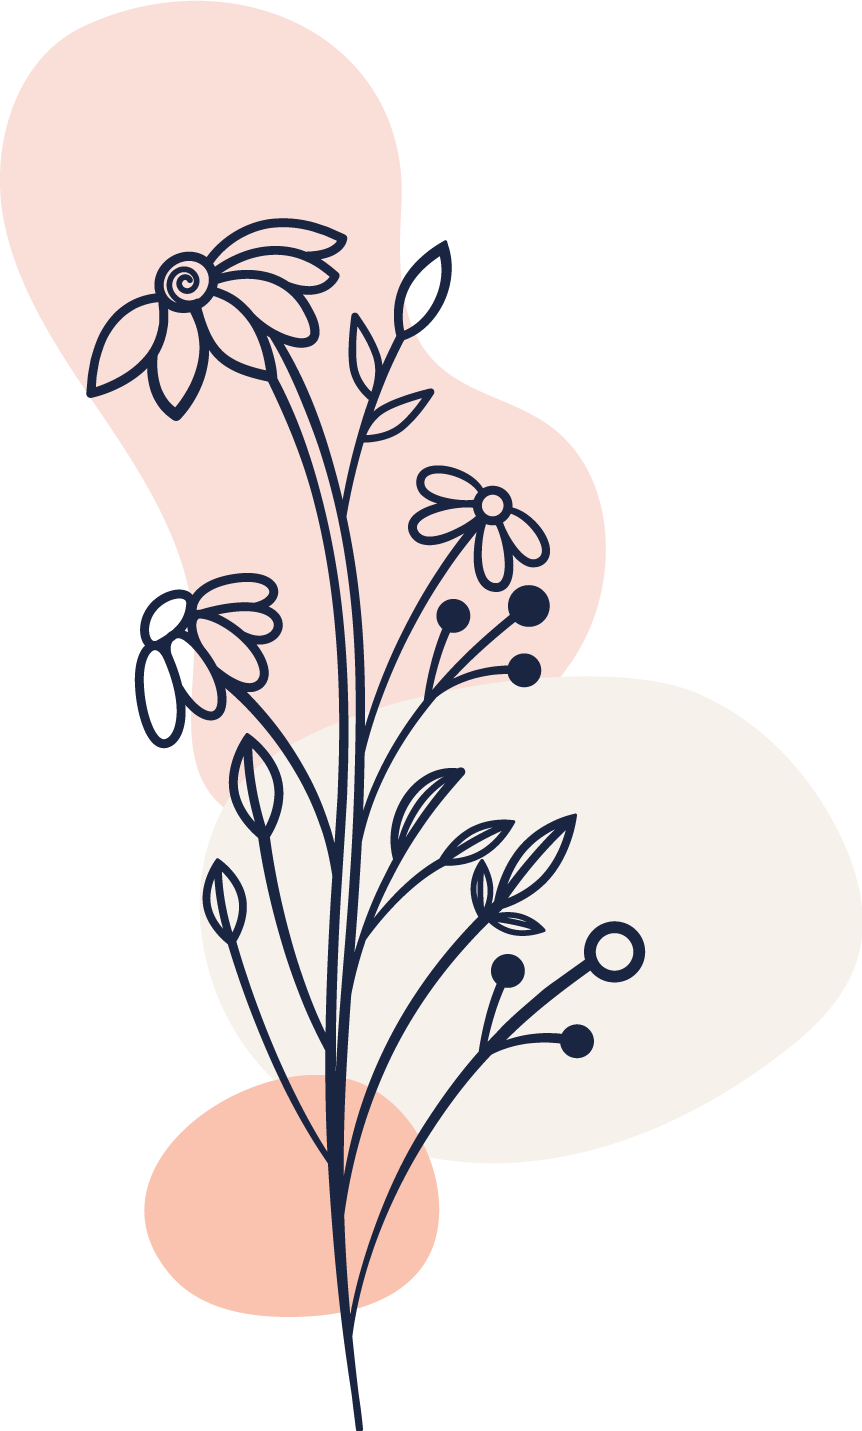 Sticker mural fleur Cerisier - TenStickers